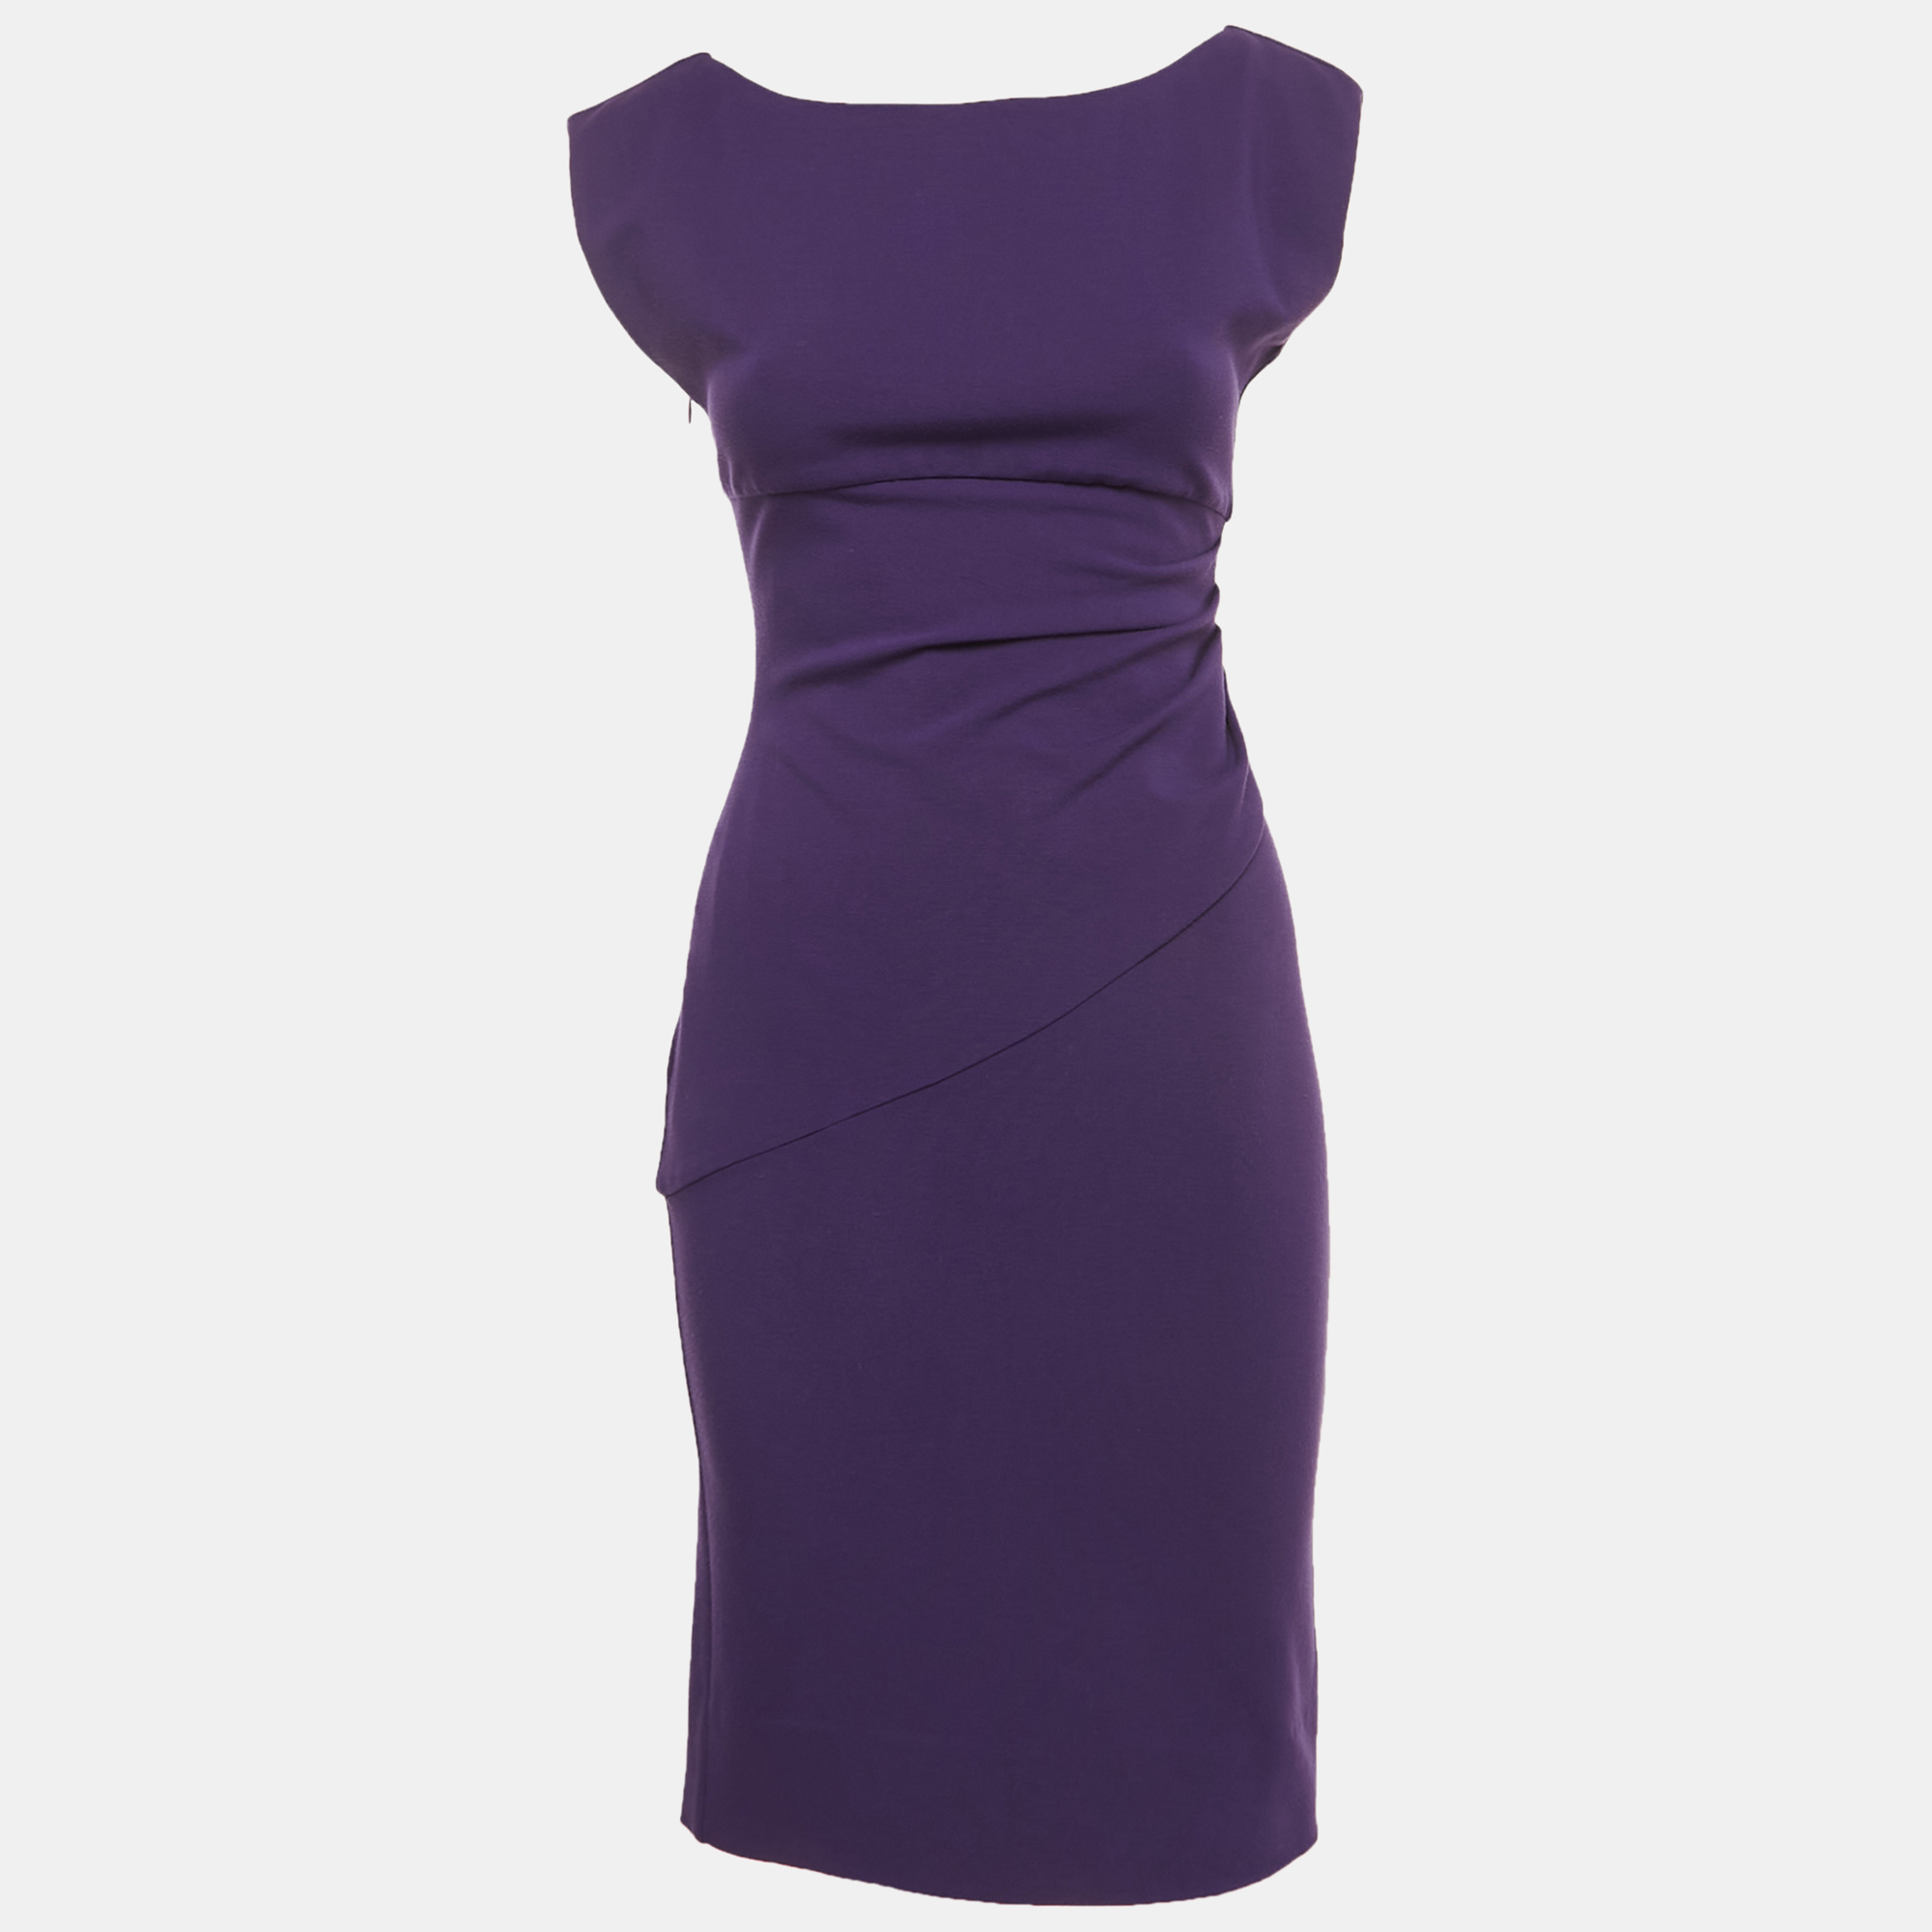 Diane von furstenberg purple knit draped sleeveless mini dress s